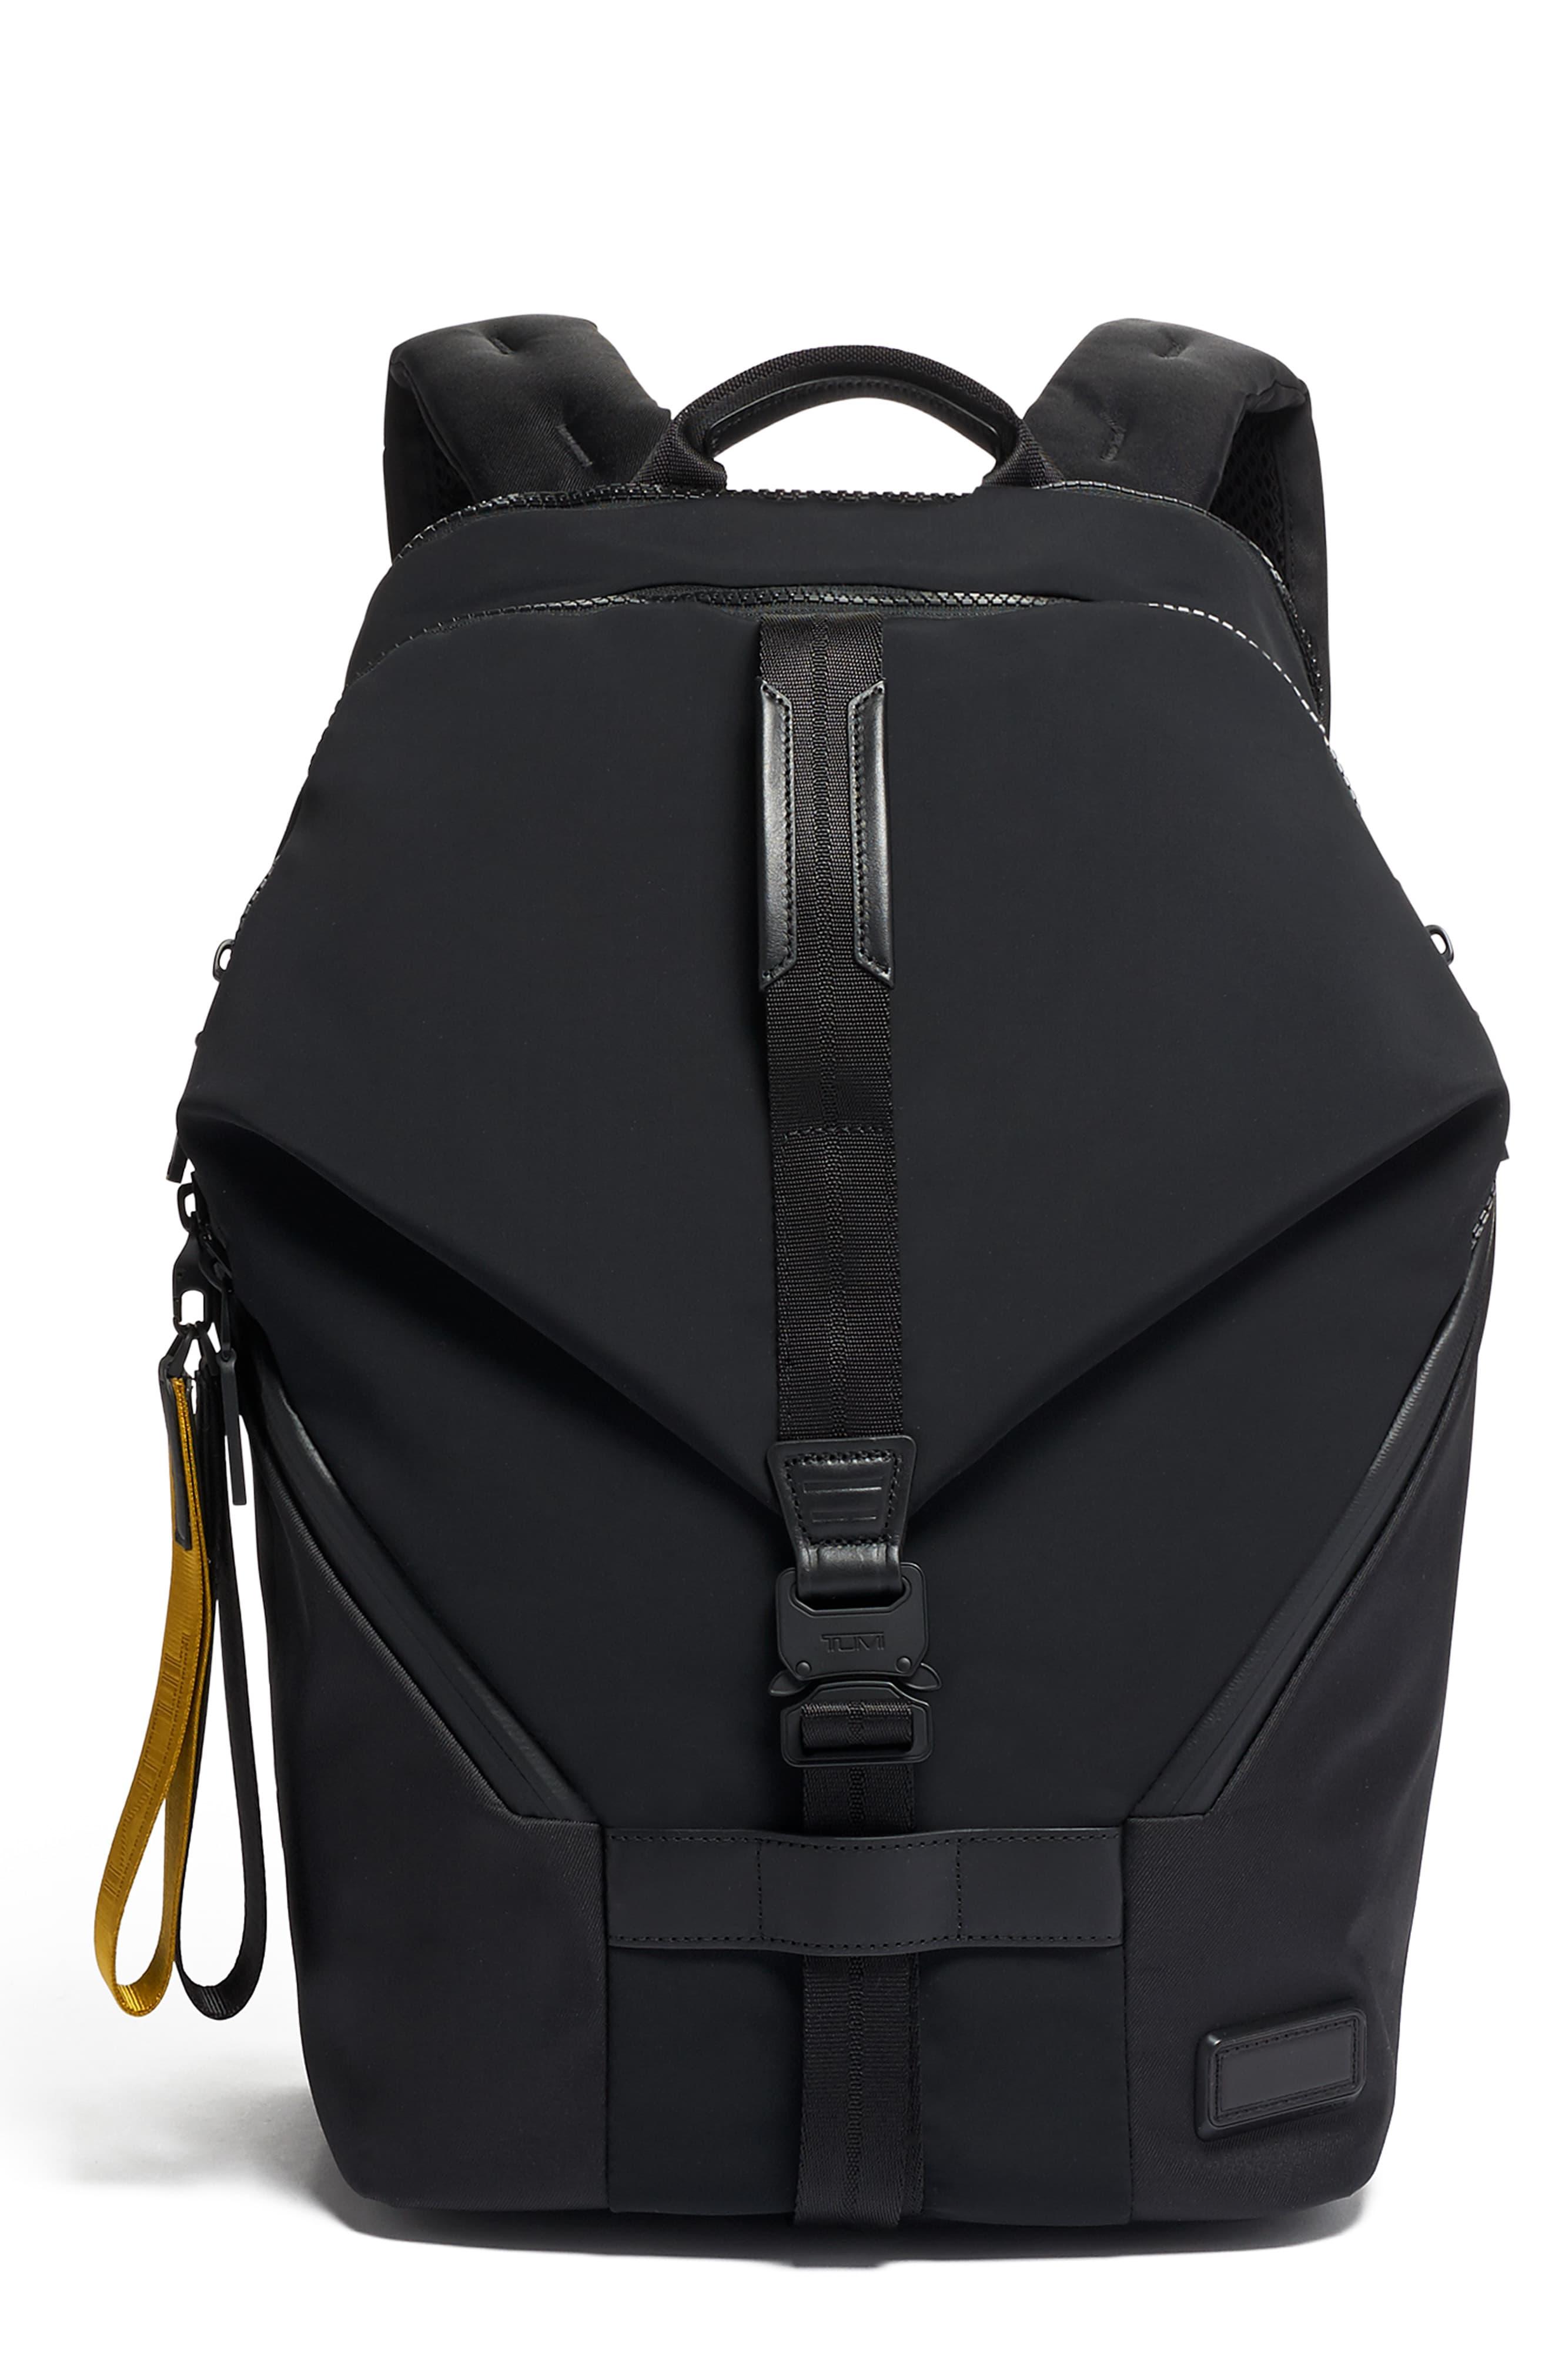 Tumi Tahoe Finch Backpack in Black for Men - Lyst